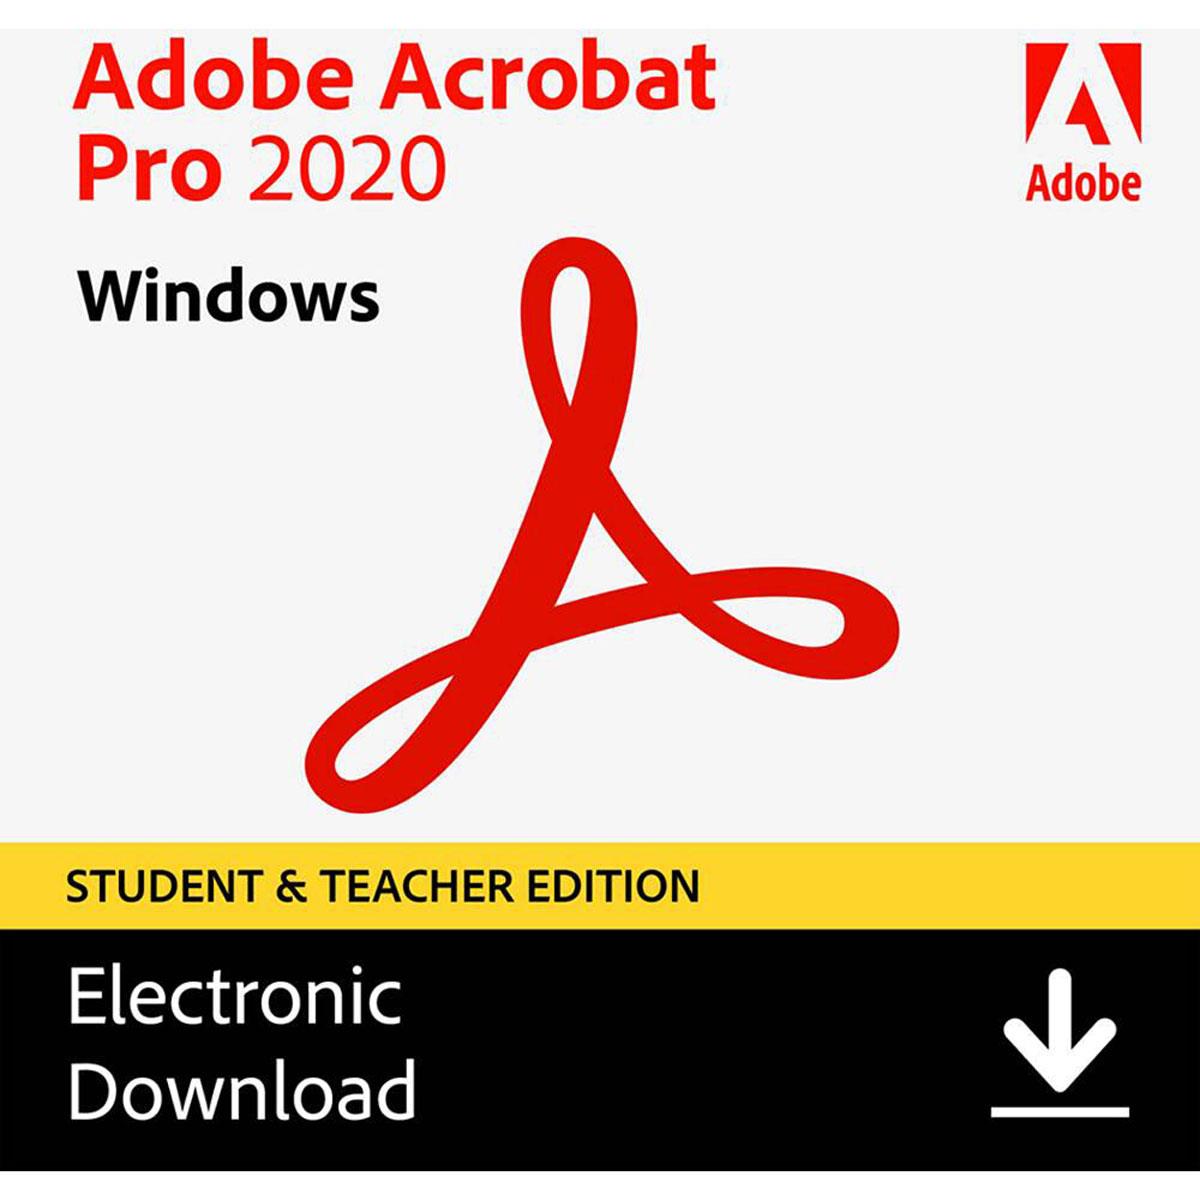 Image of Adobe Acrobat Pro 2020 Software for Windows